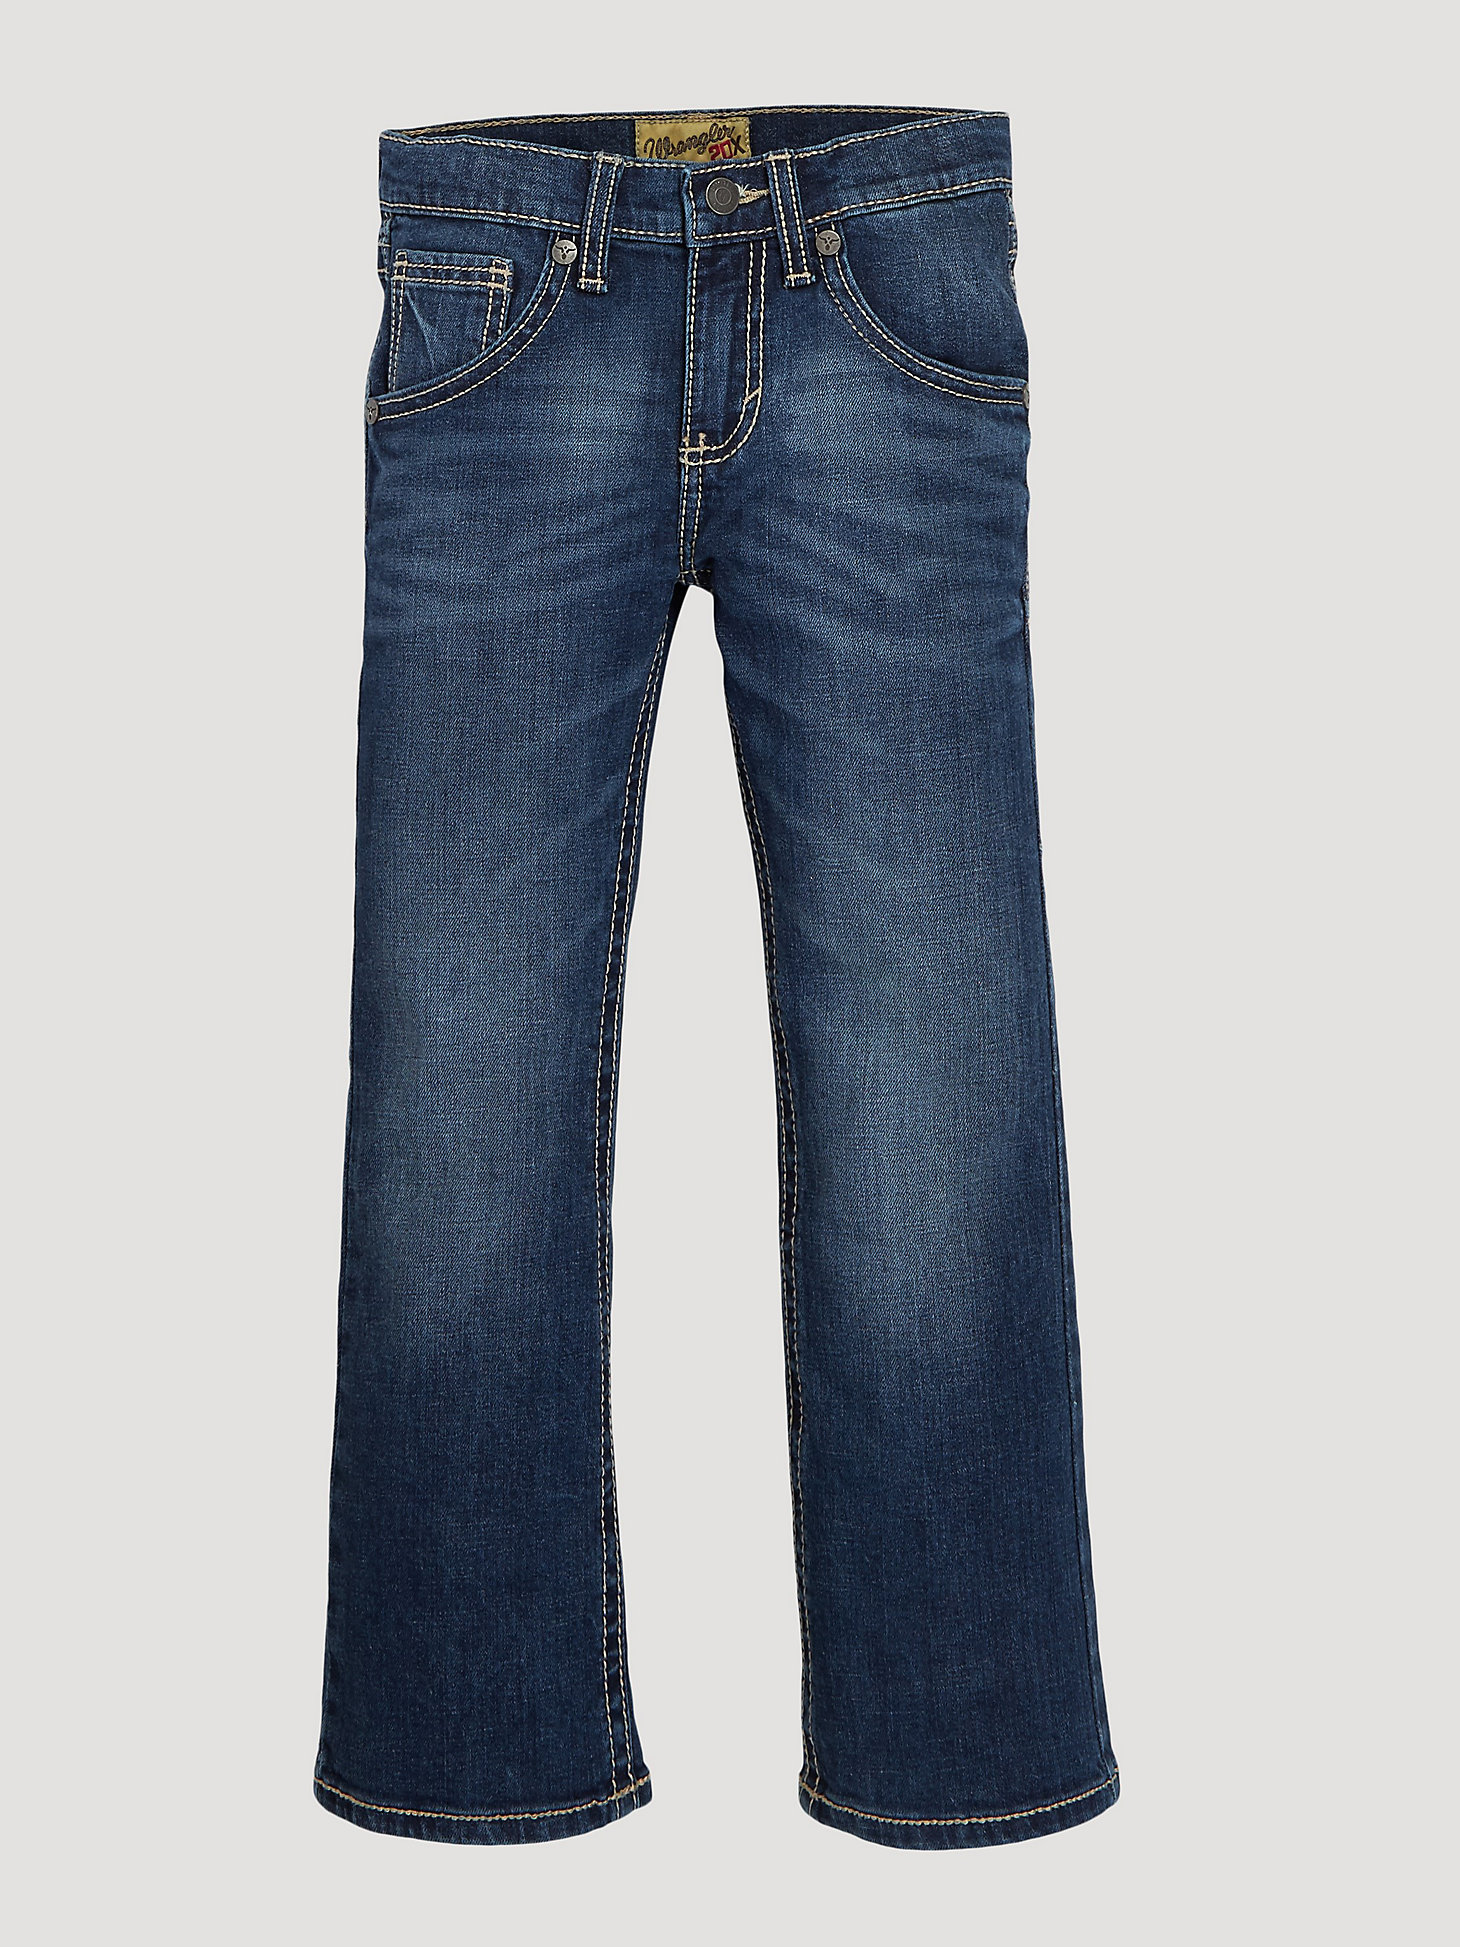 Arriba 86+ imagen wrangler 20x bootcut jeans